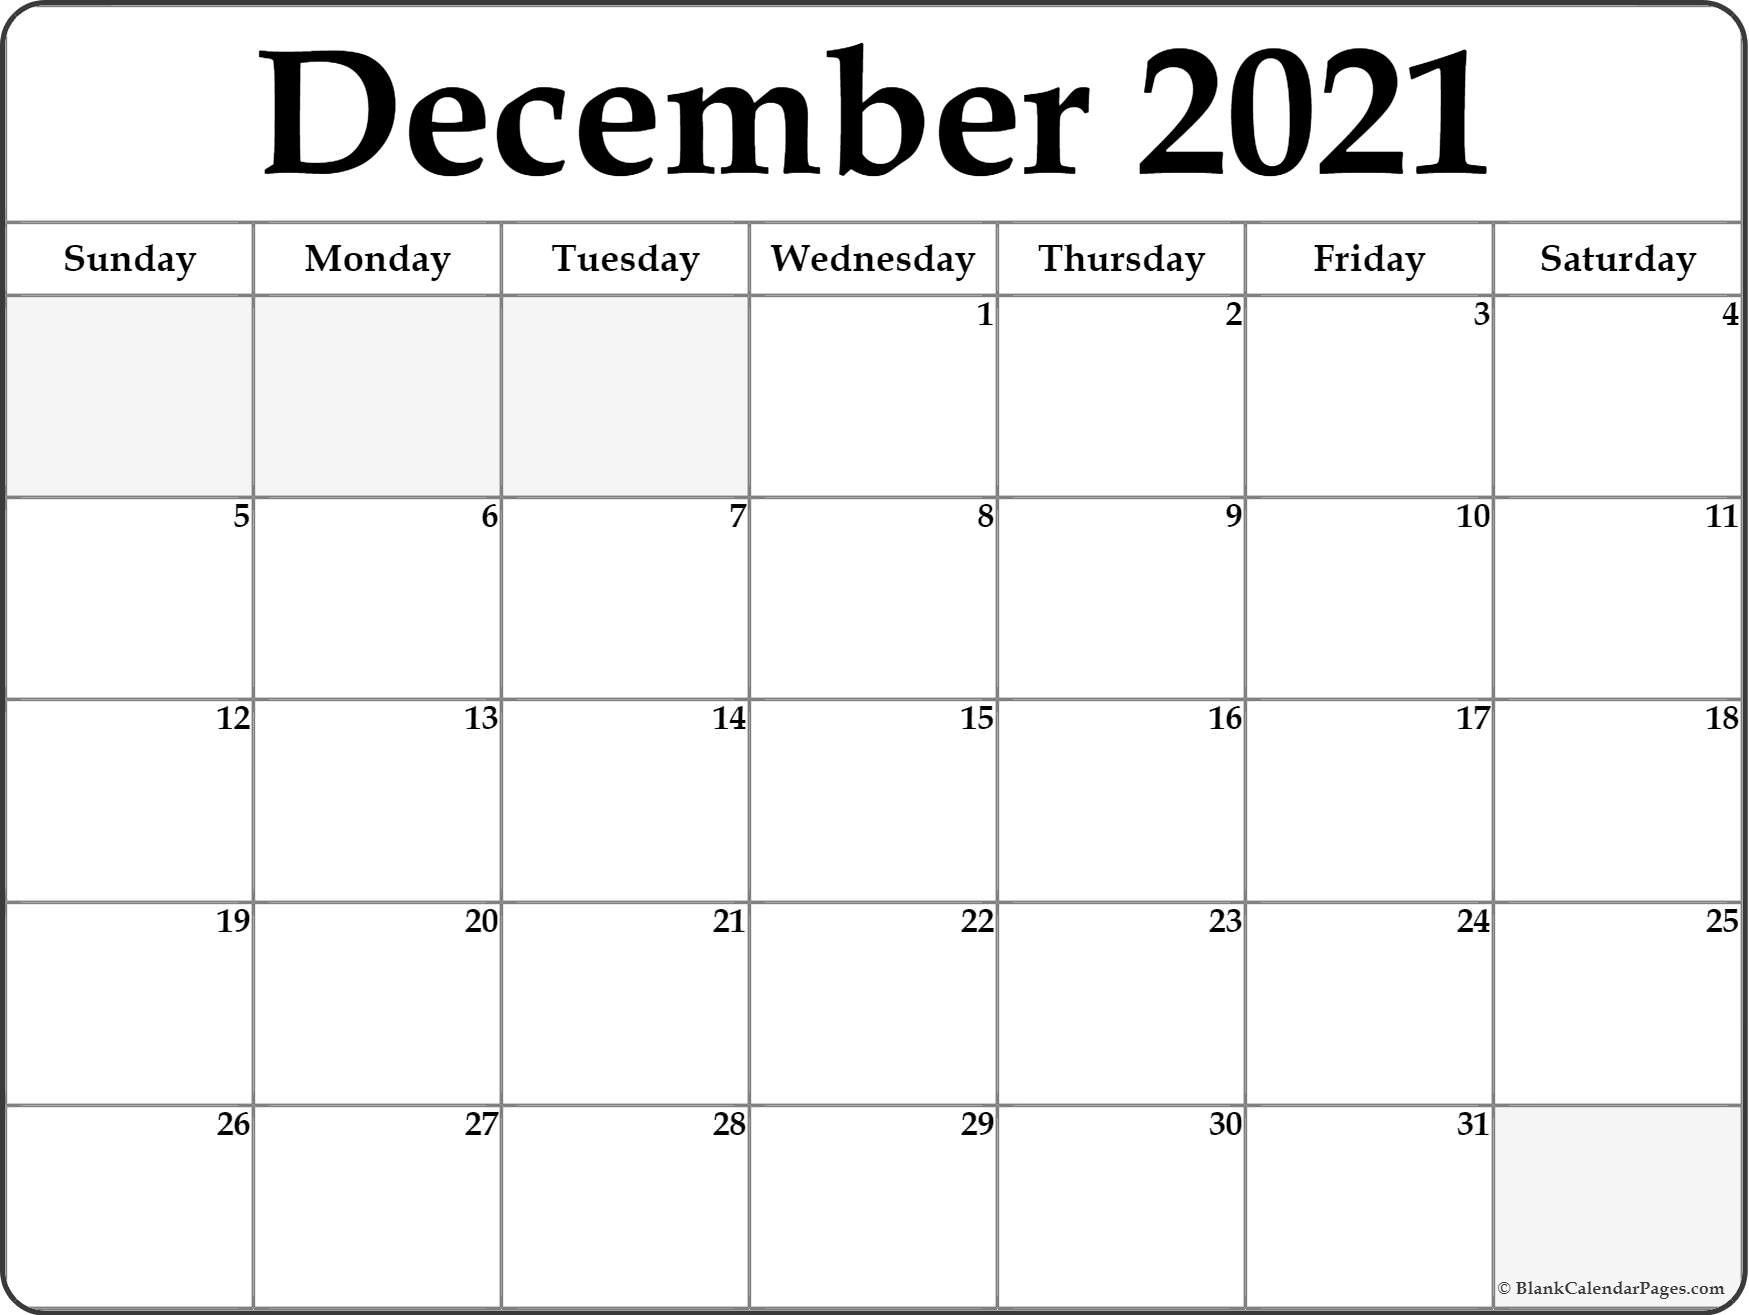 December 2021 Blank Calendar Templates December 2021 Blank